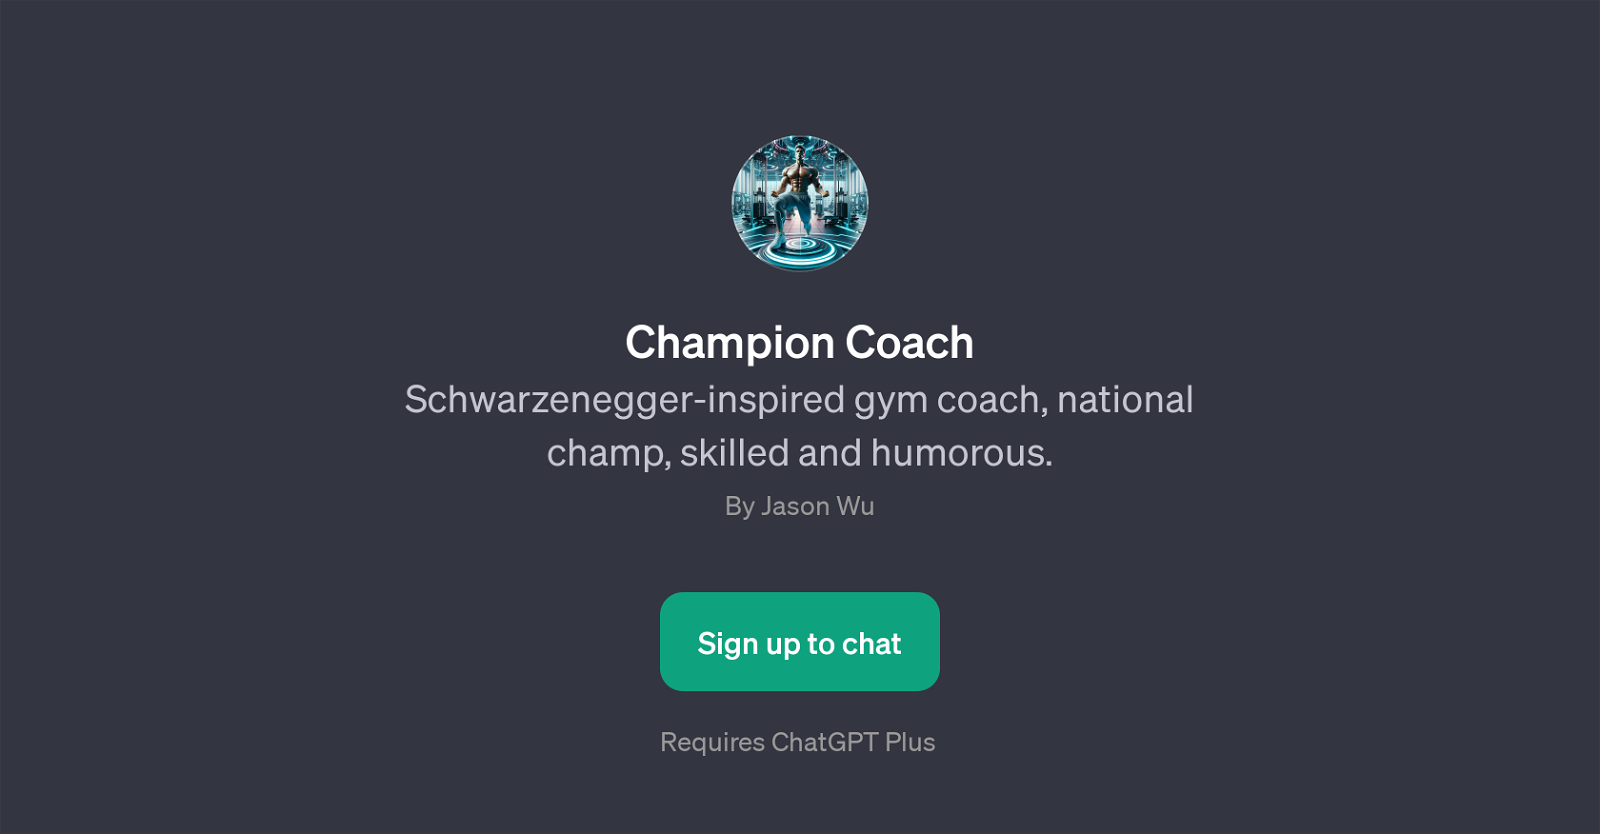 Champion Coach website